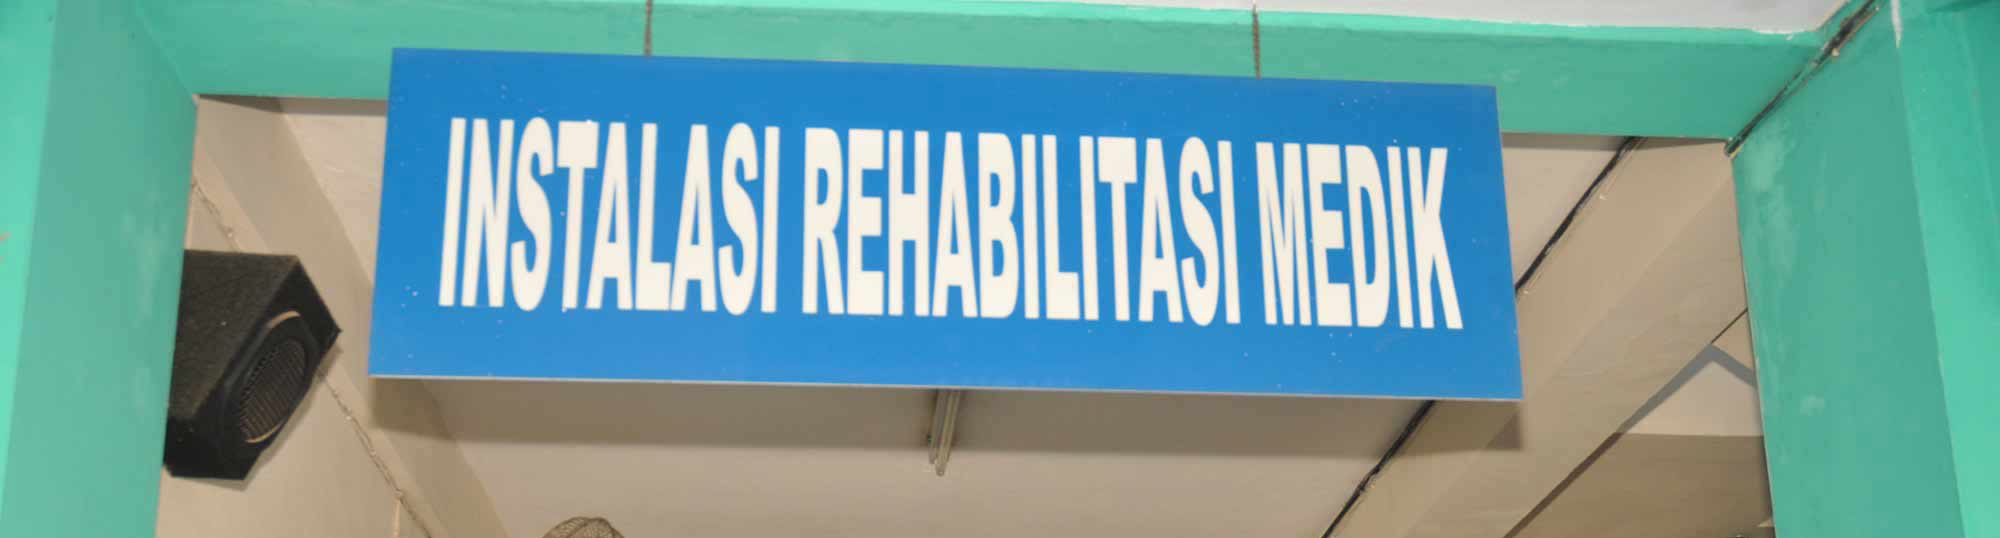 Instalasi Rehabilitasi Medik – RSUD Gambiran Kota Kediri